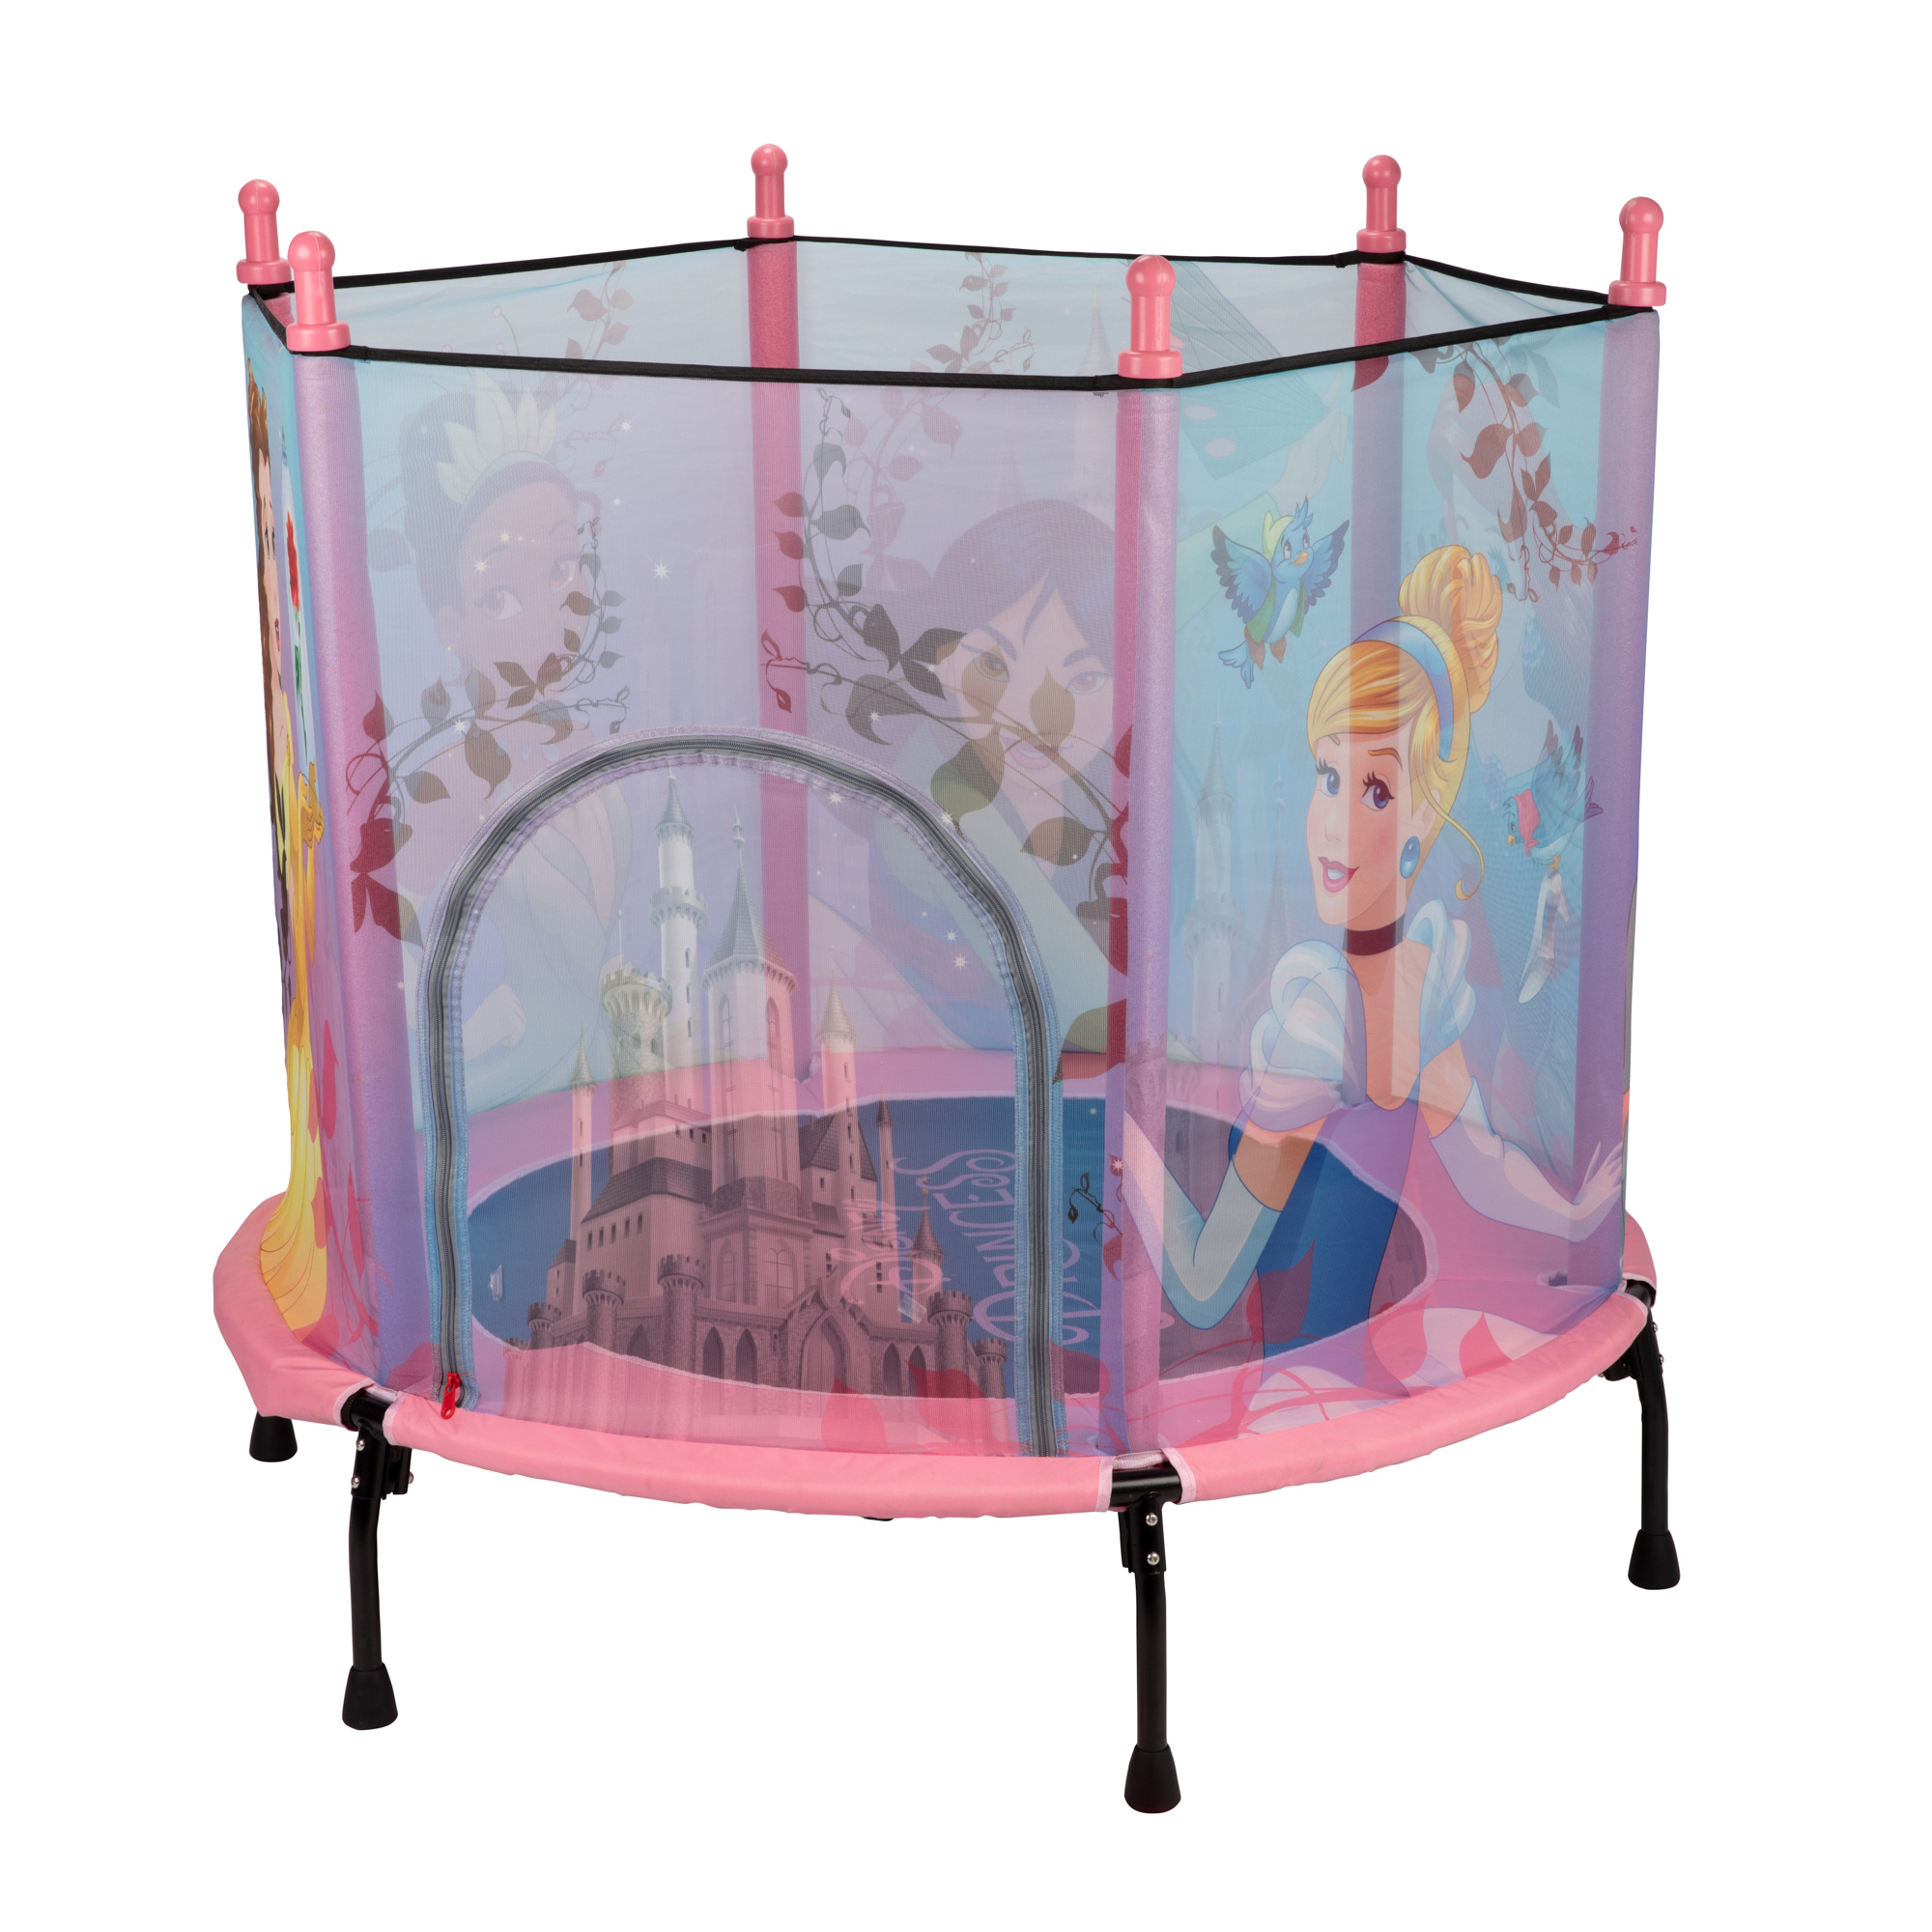 Weee-Do Disney Princess Castle 4ft Trampoline Hideout